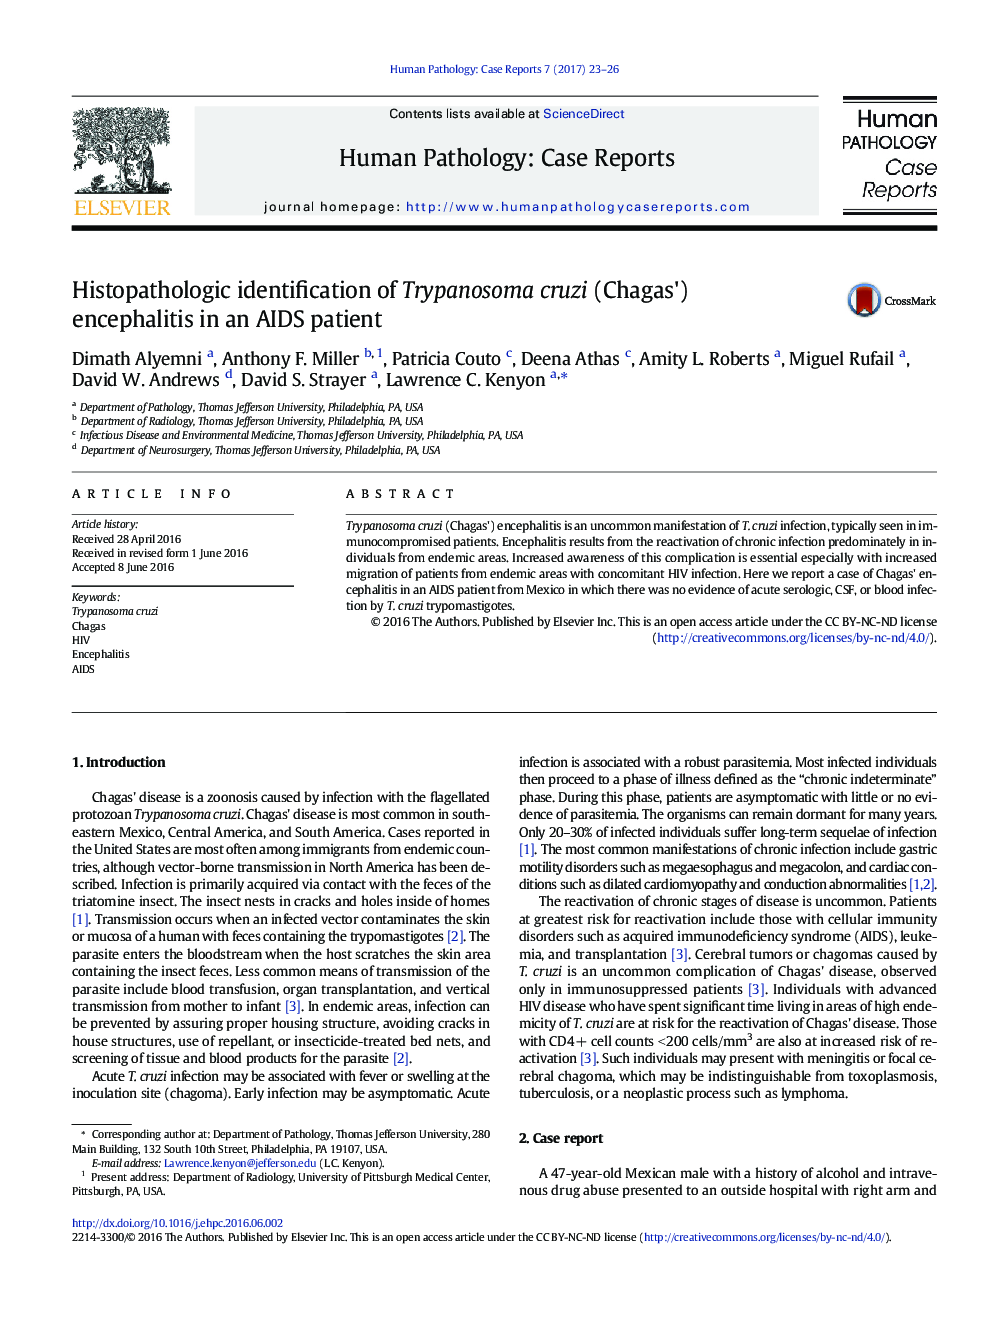 Histopathologic identification of Trypanosoma cruzi (Chagas') encephalitis in an AIDS patient